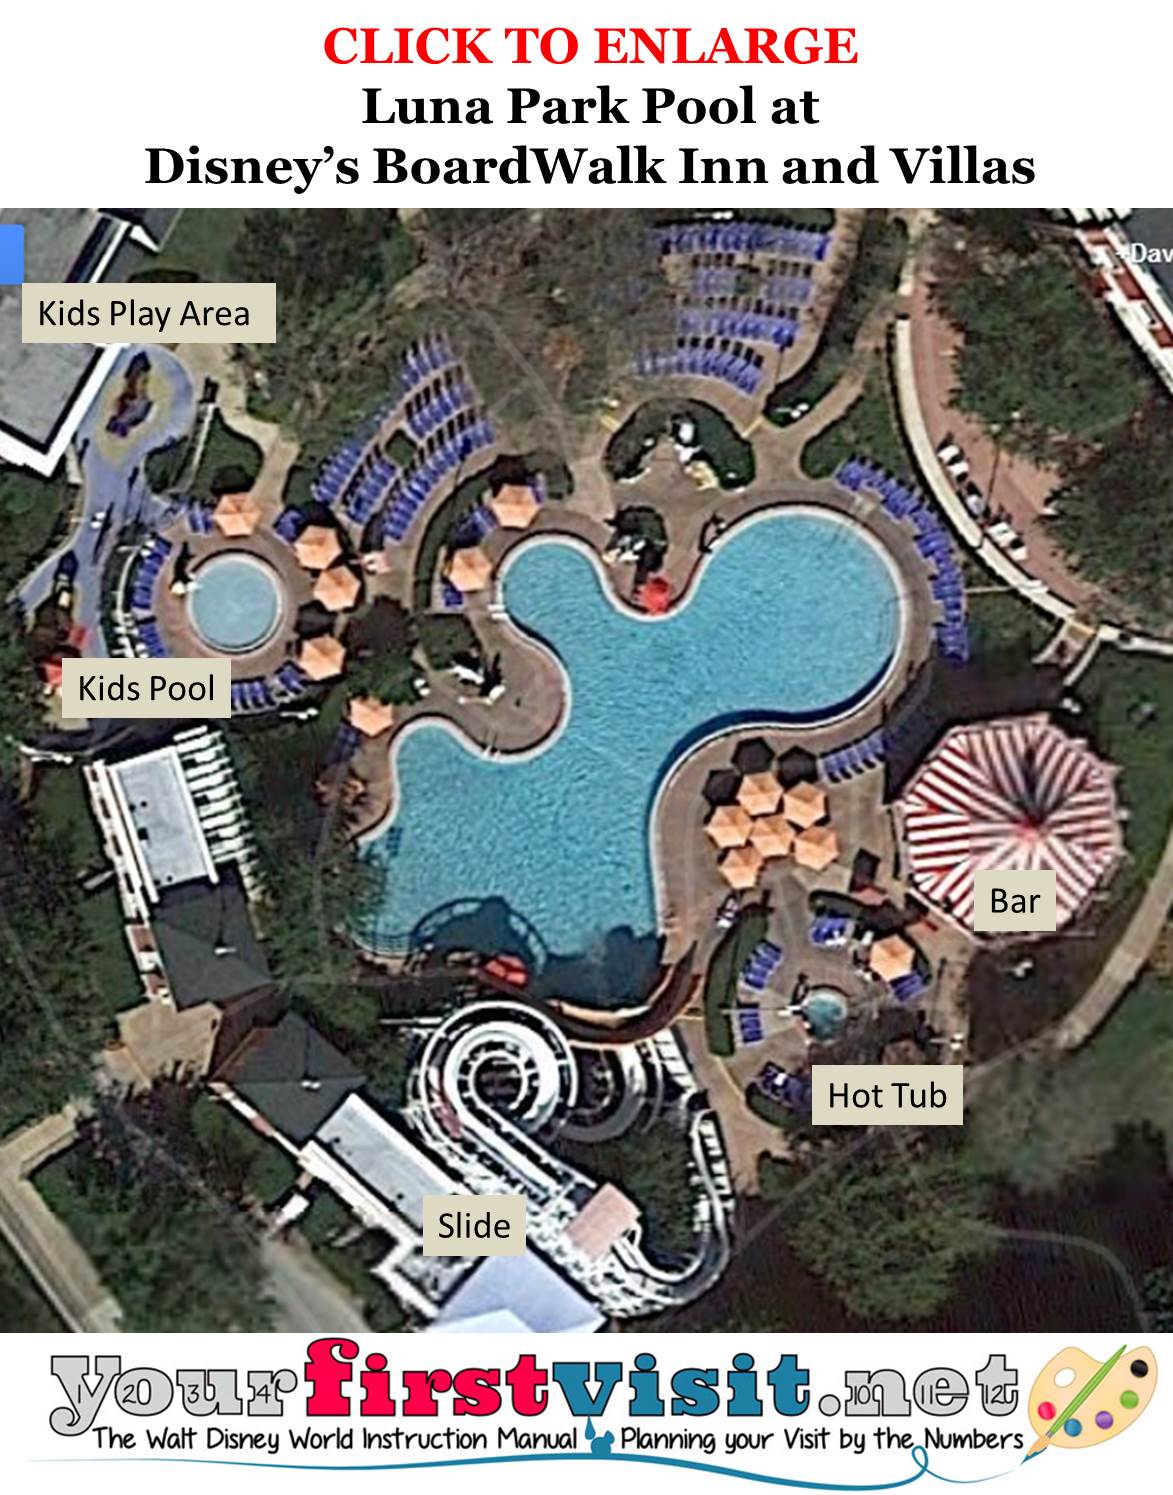 Luna Park Pool at Disney's BoardWalk Inn and Villas from yourfirstvisit.net